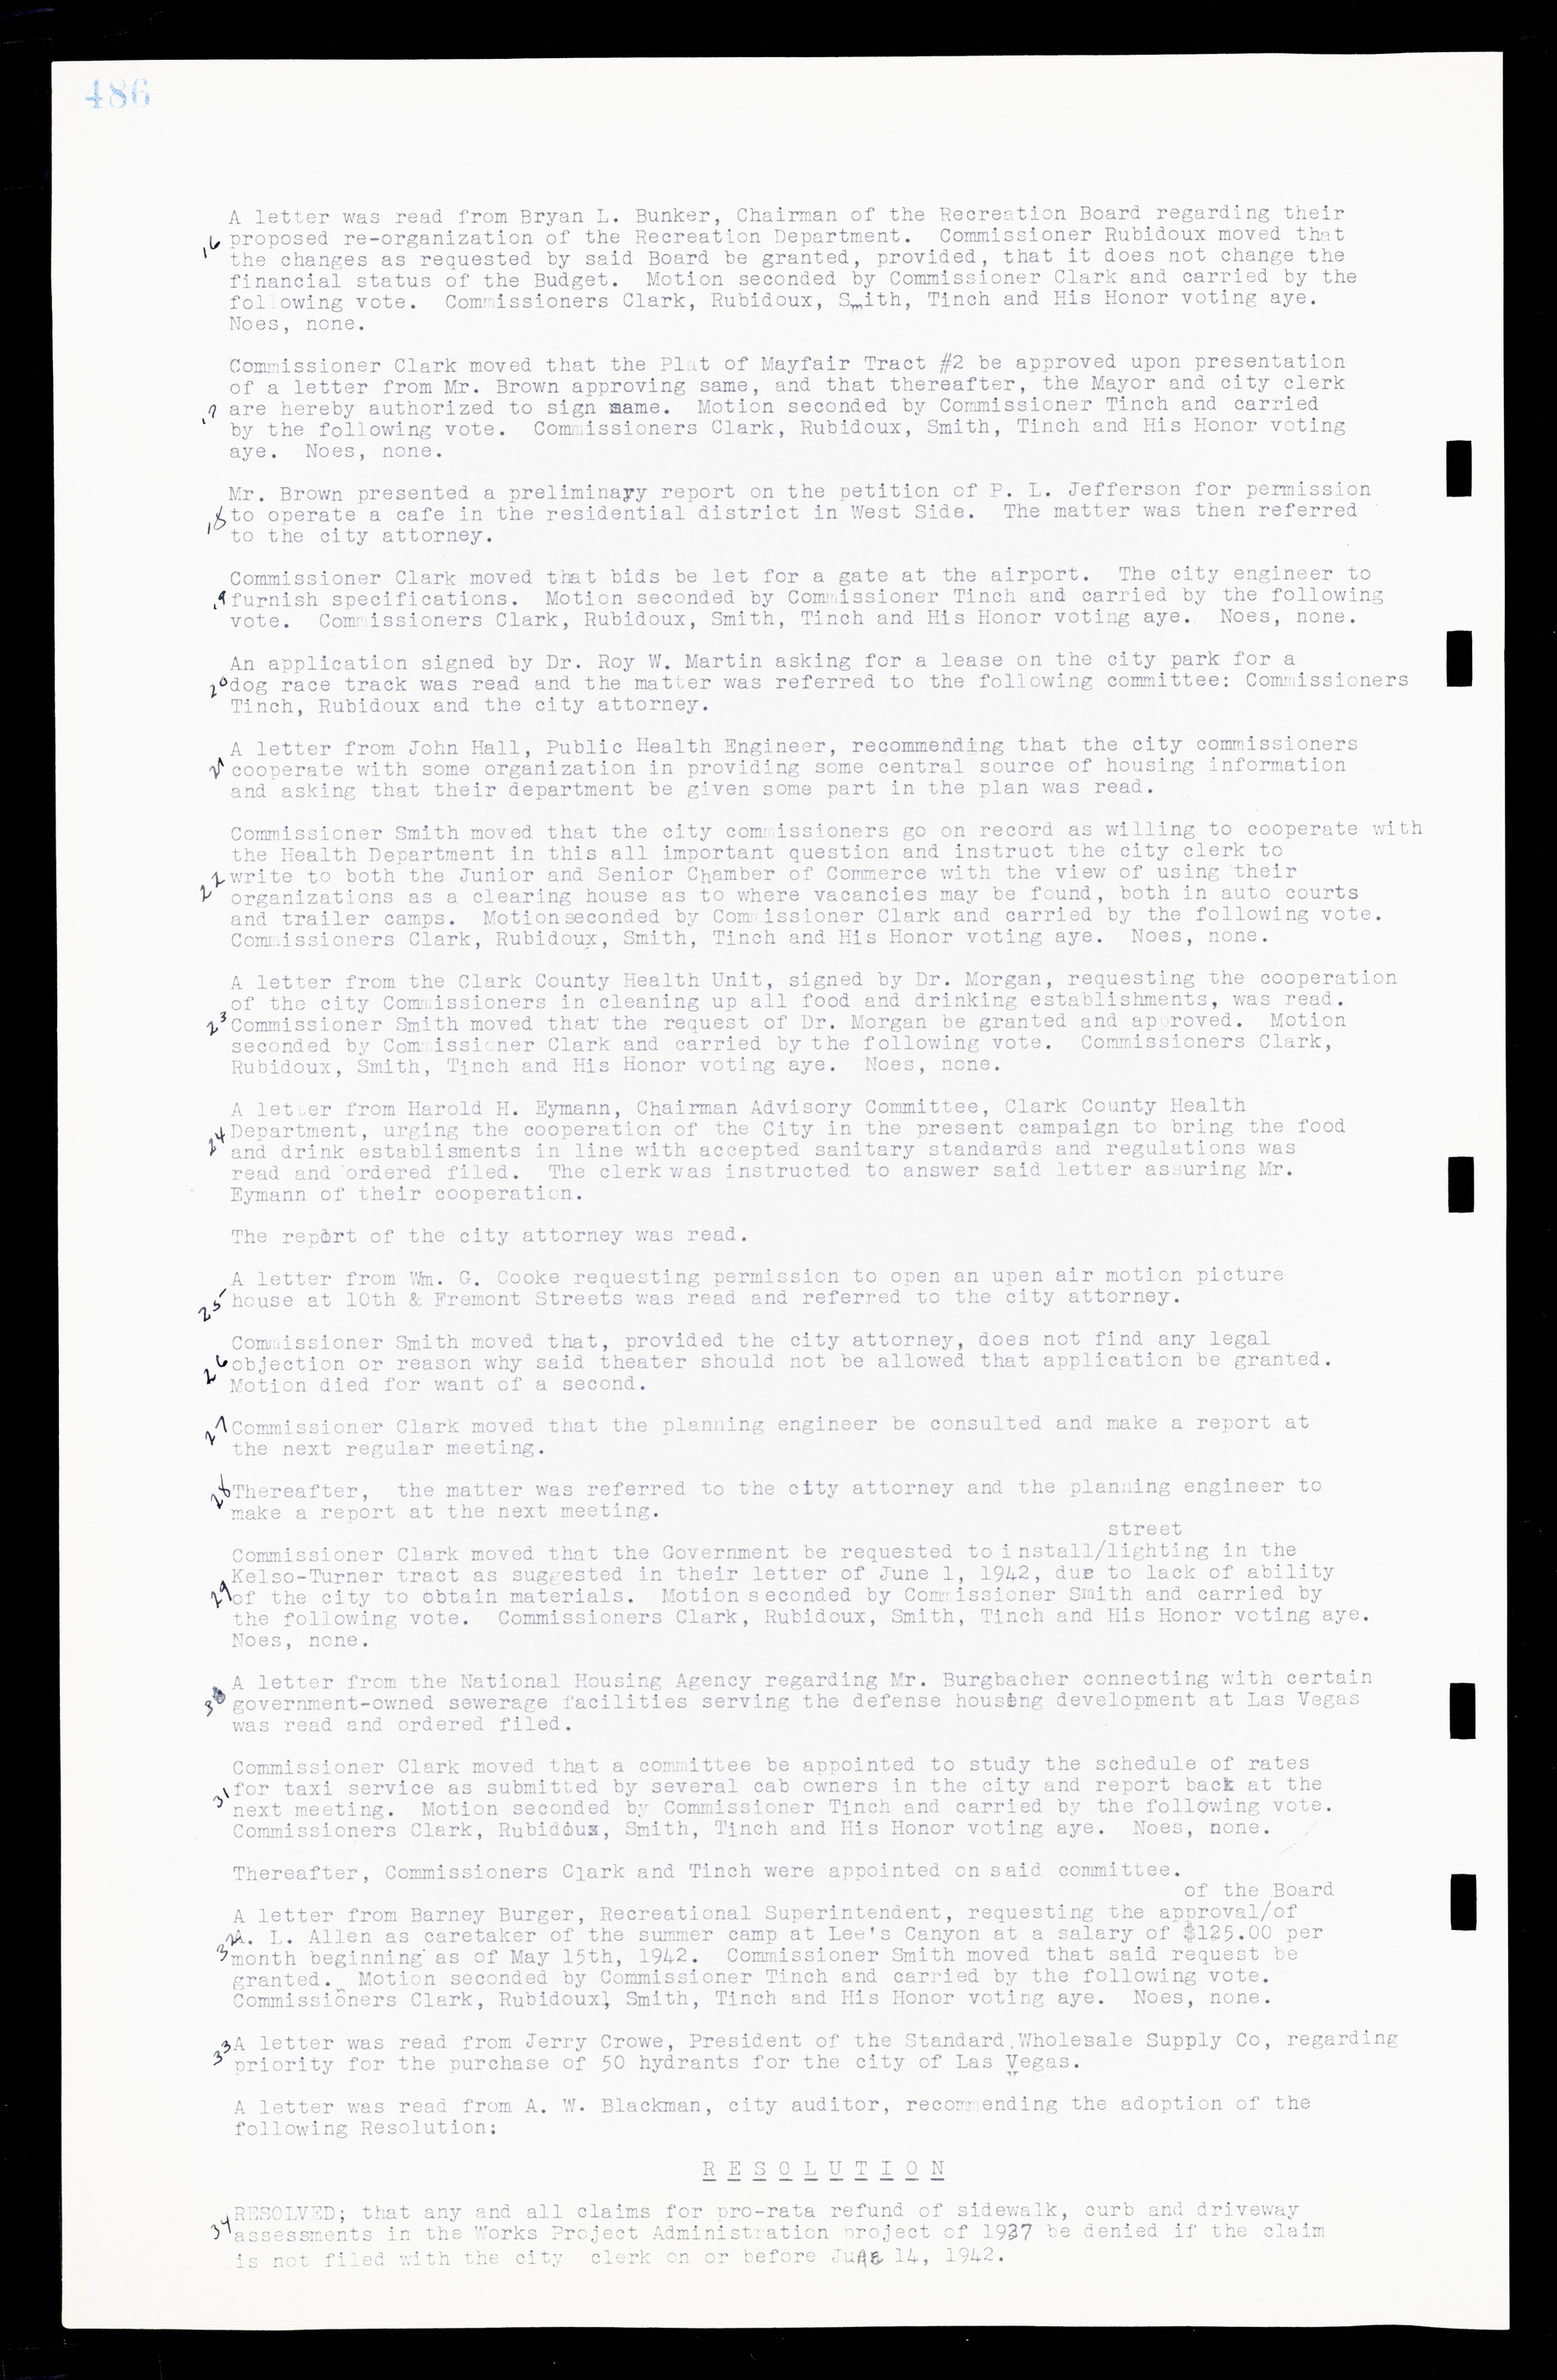 Las Vegas City Commission Minutes, February 17, 1937 to August 4, 1942, lvc000004-514